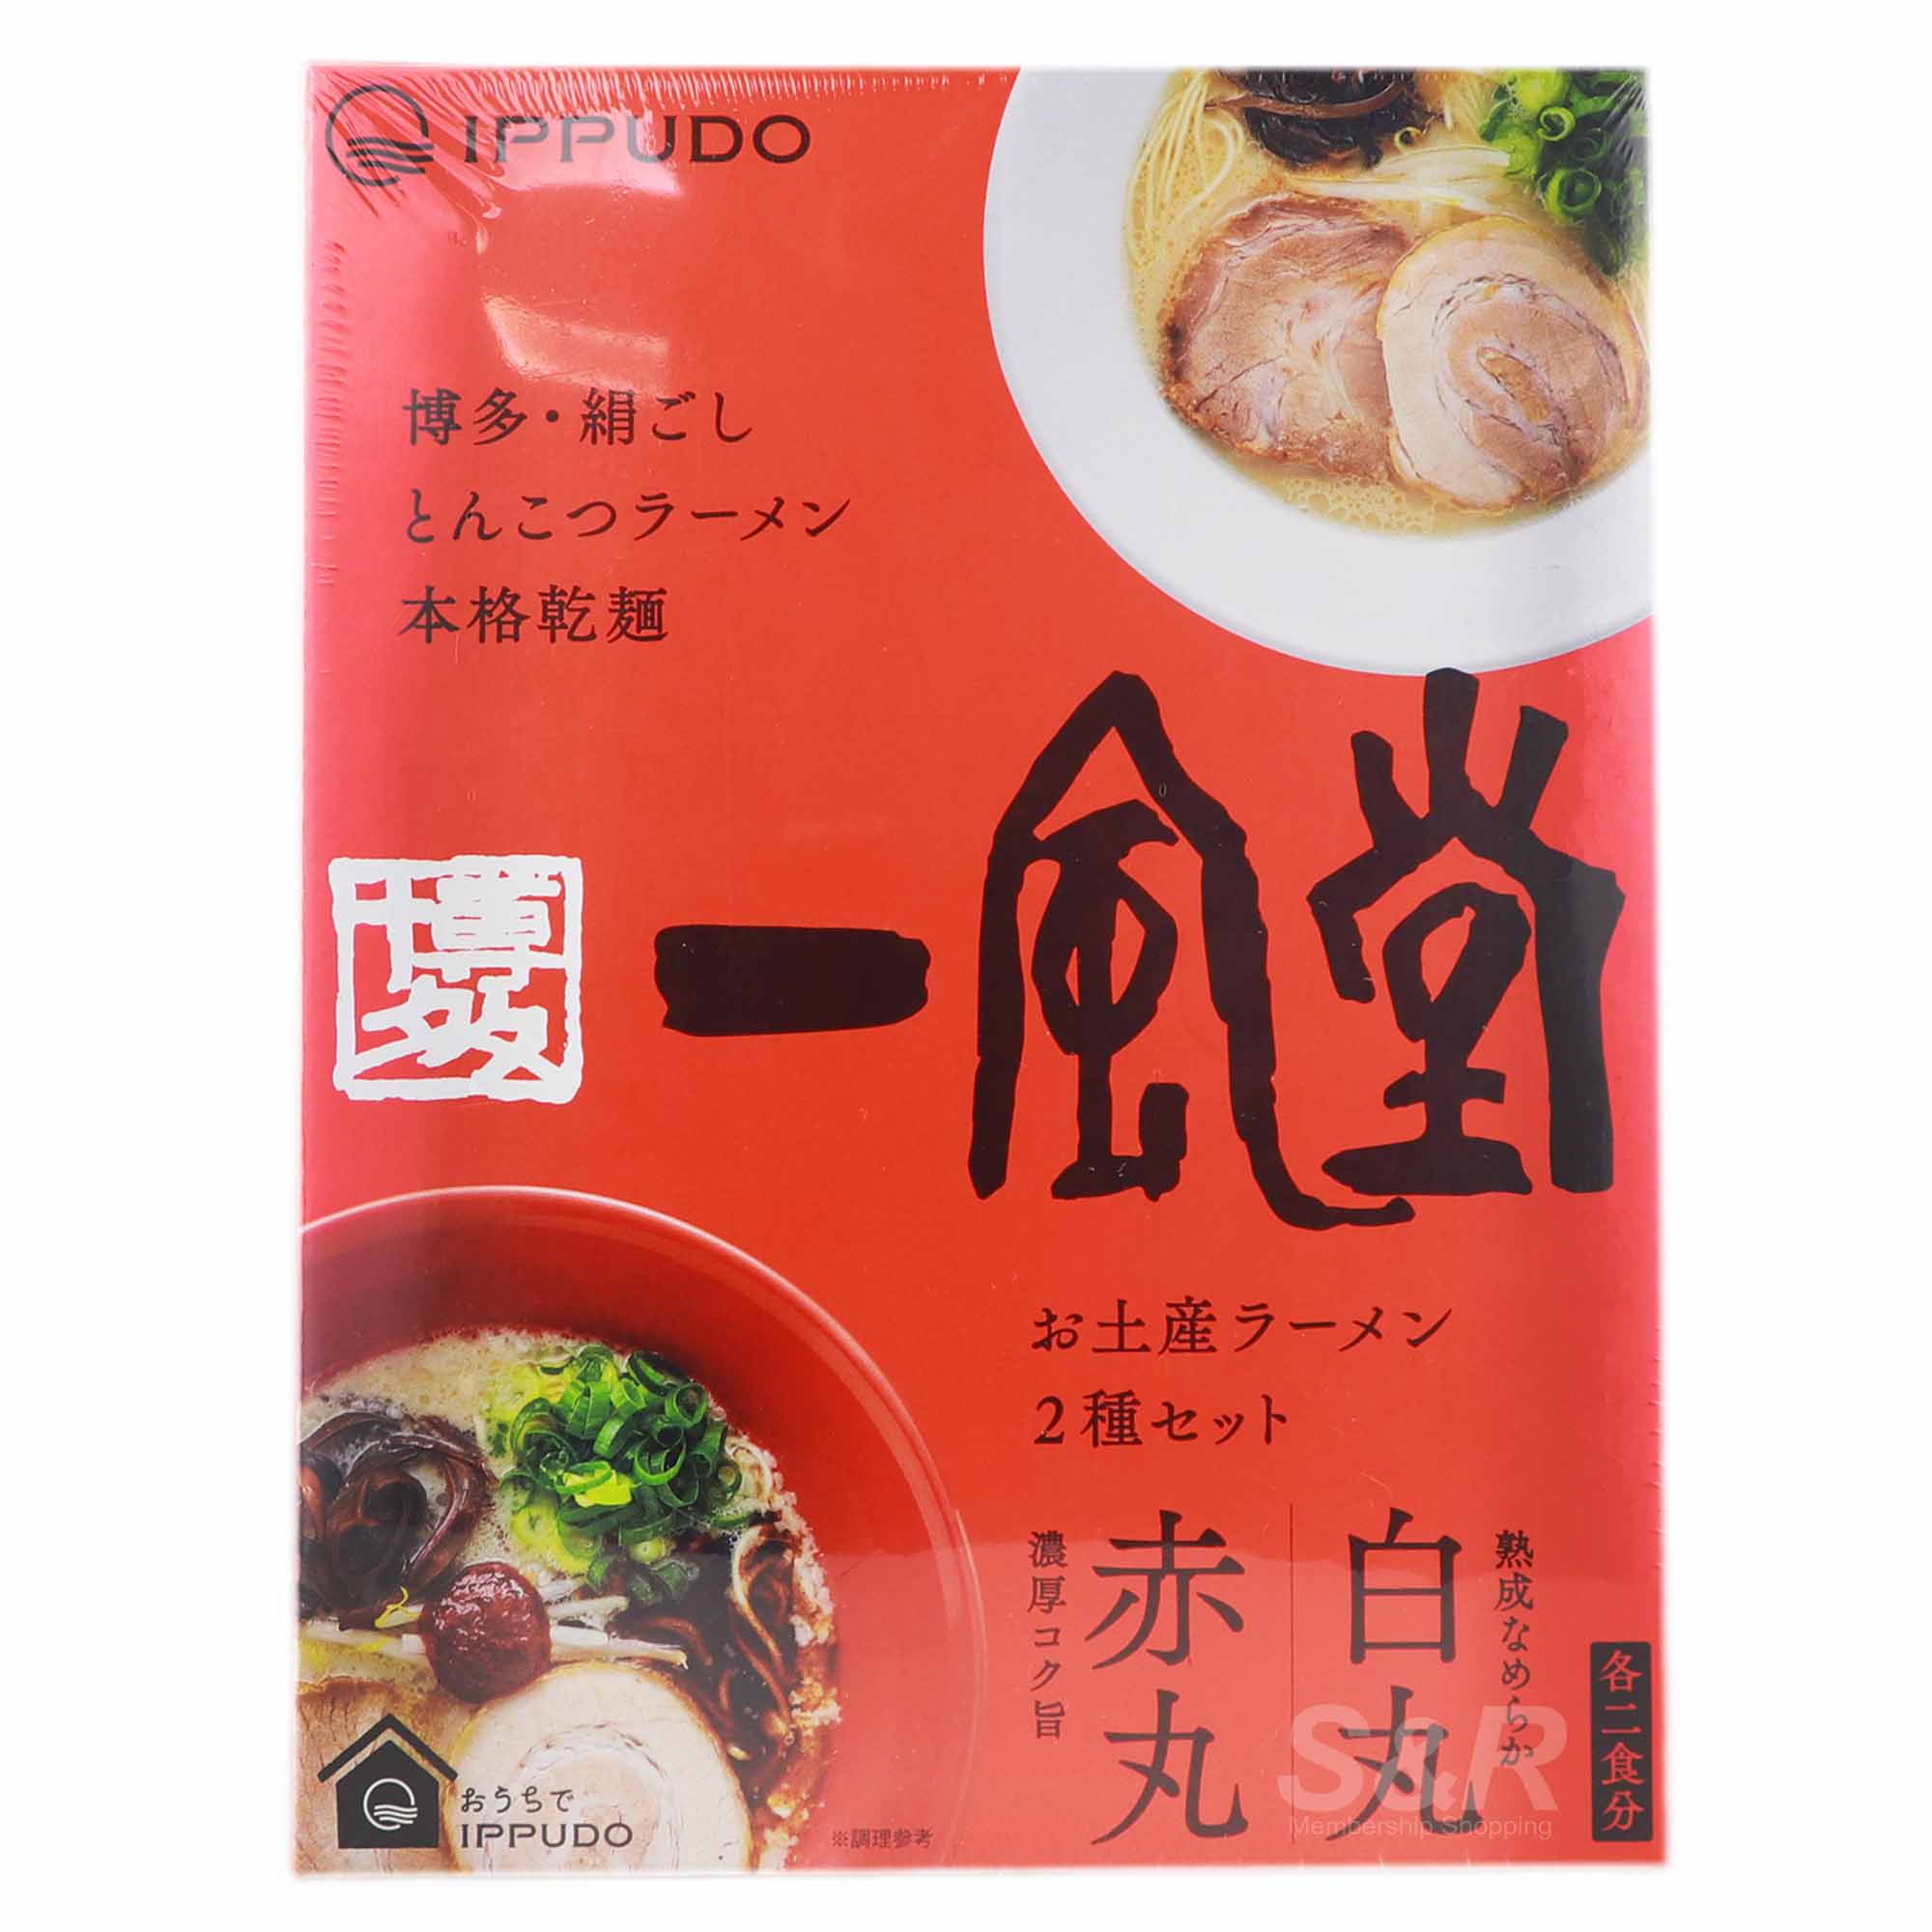 Ippudo Ramen Akamaru and Shiromaru Flavor Gift Box 4 servings